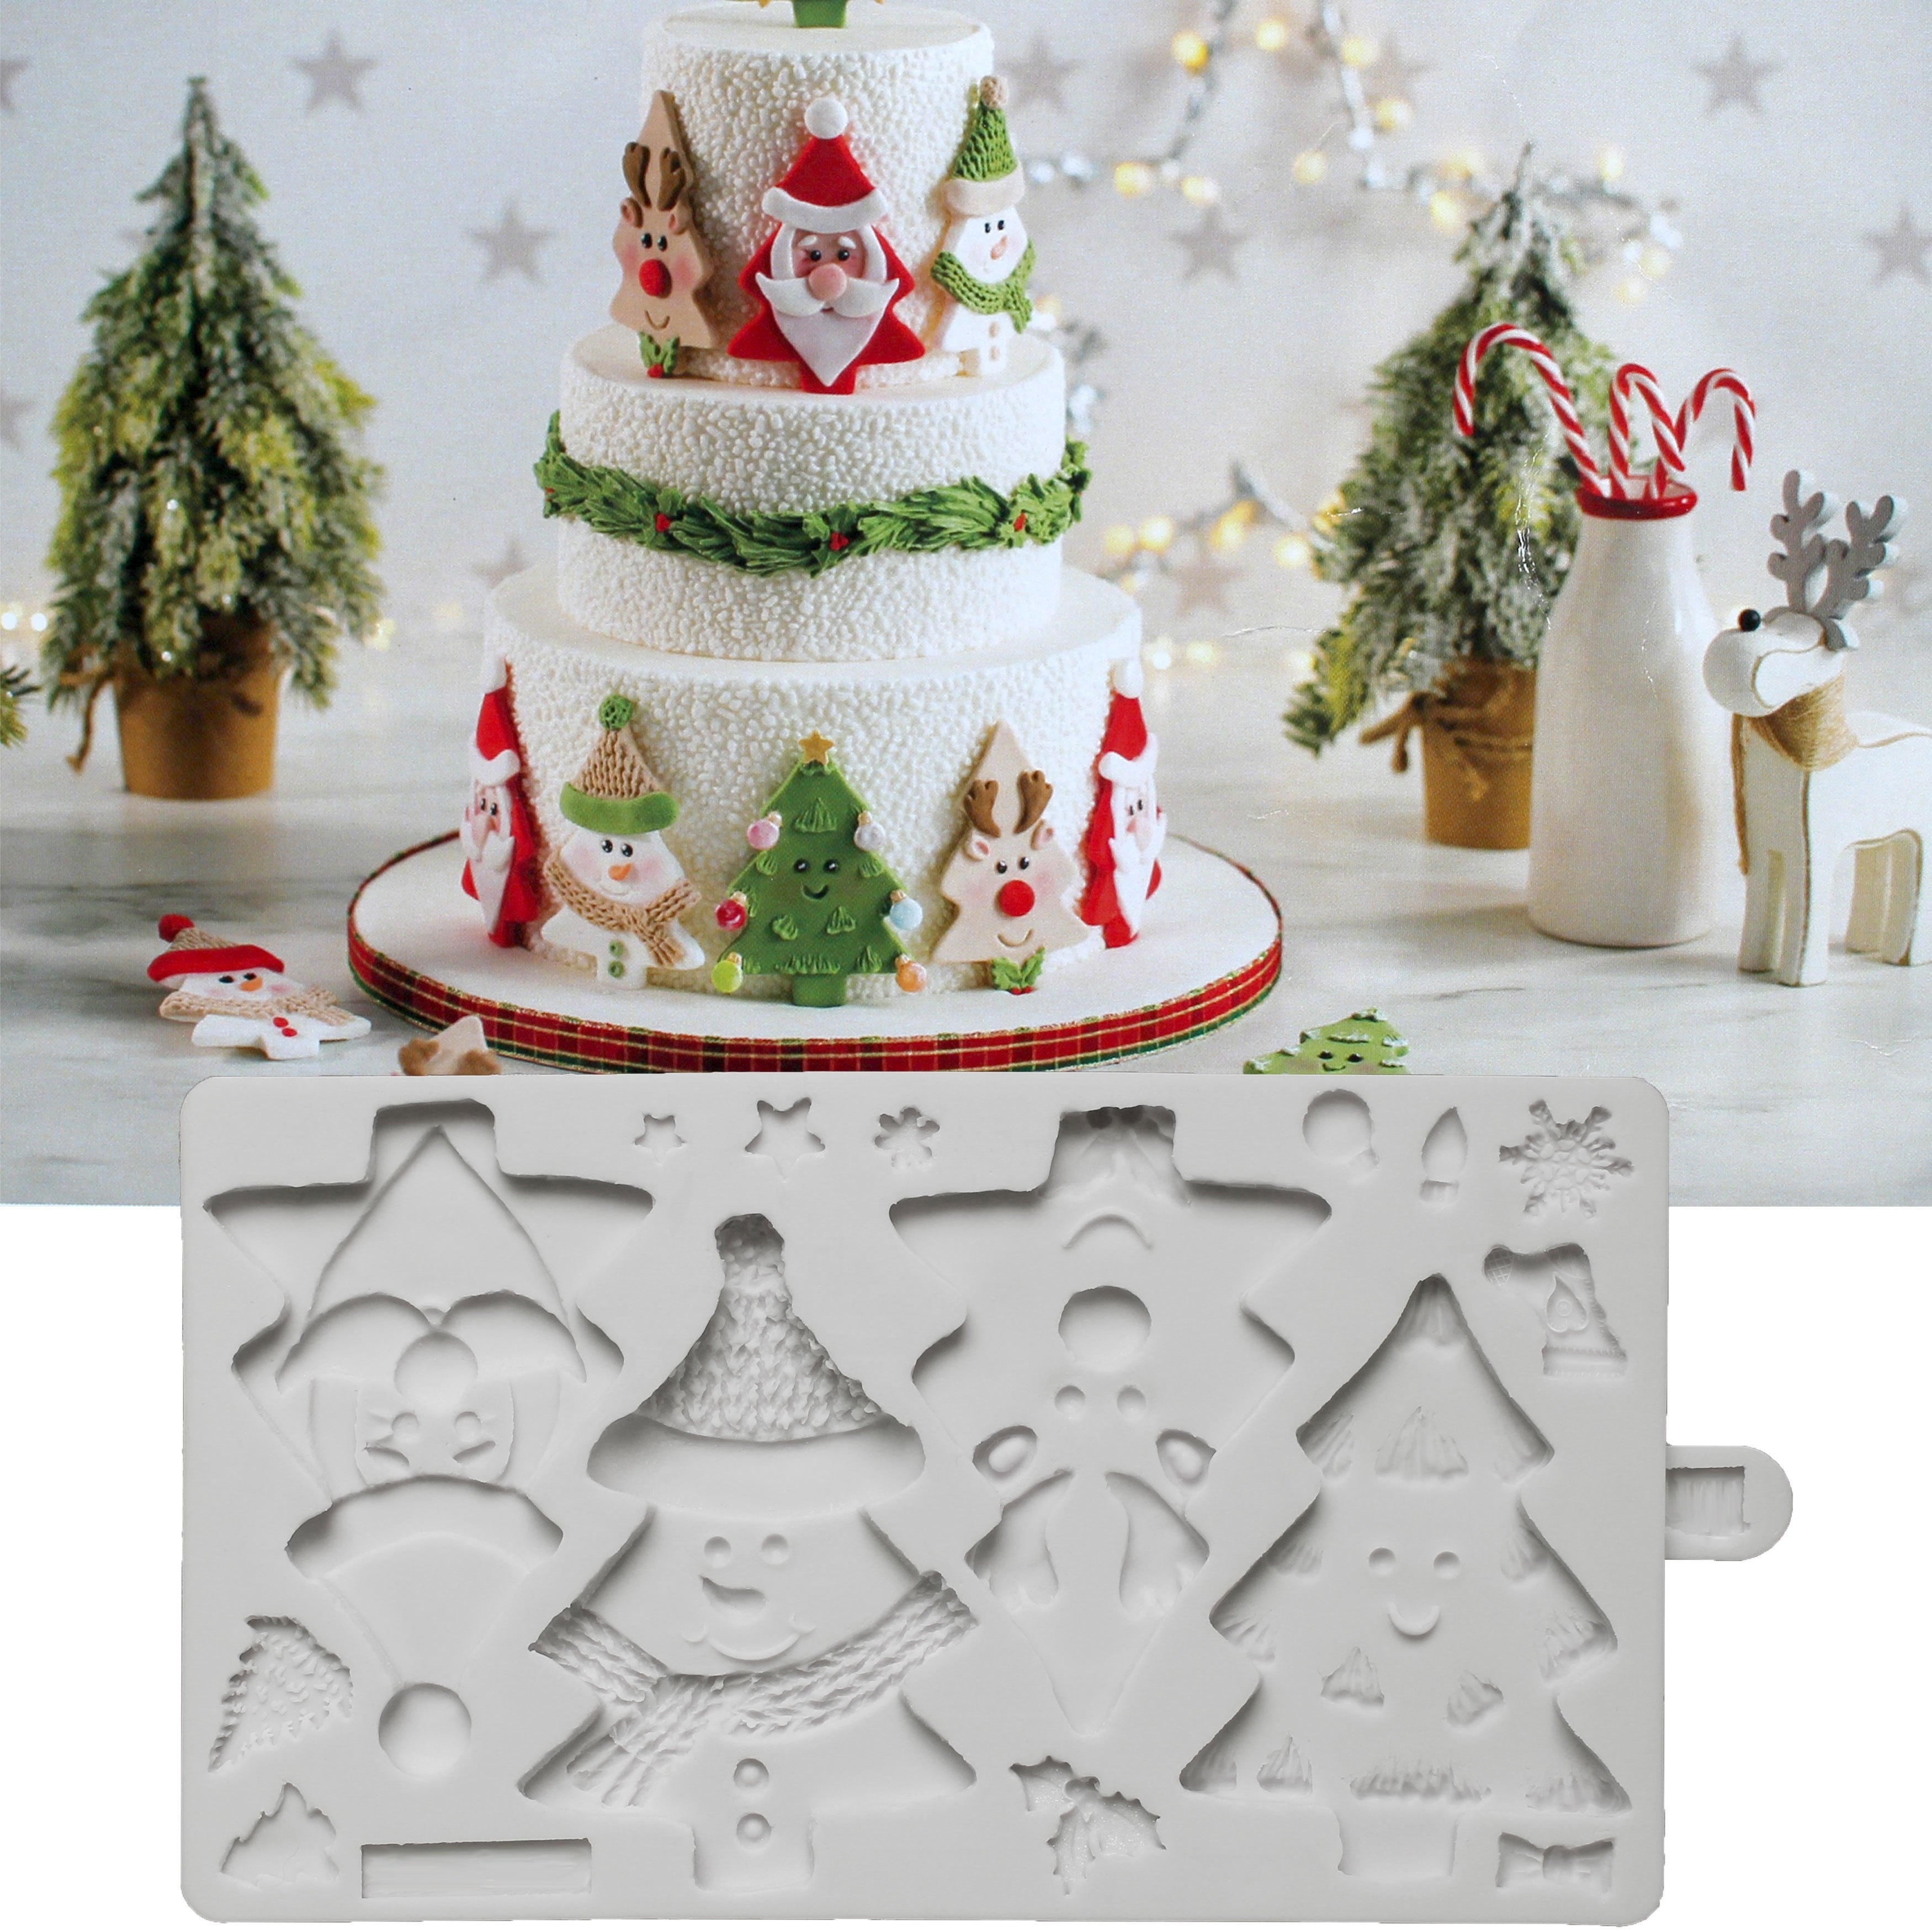 3D Silicone Christmas Baking Molds, Christmas Tree Cake Pan, Tree